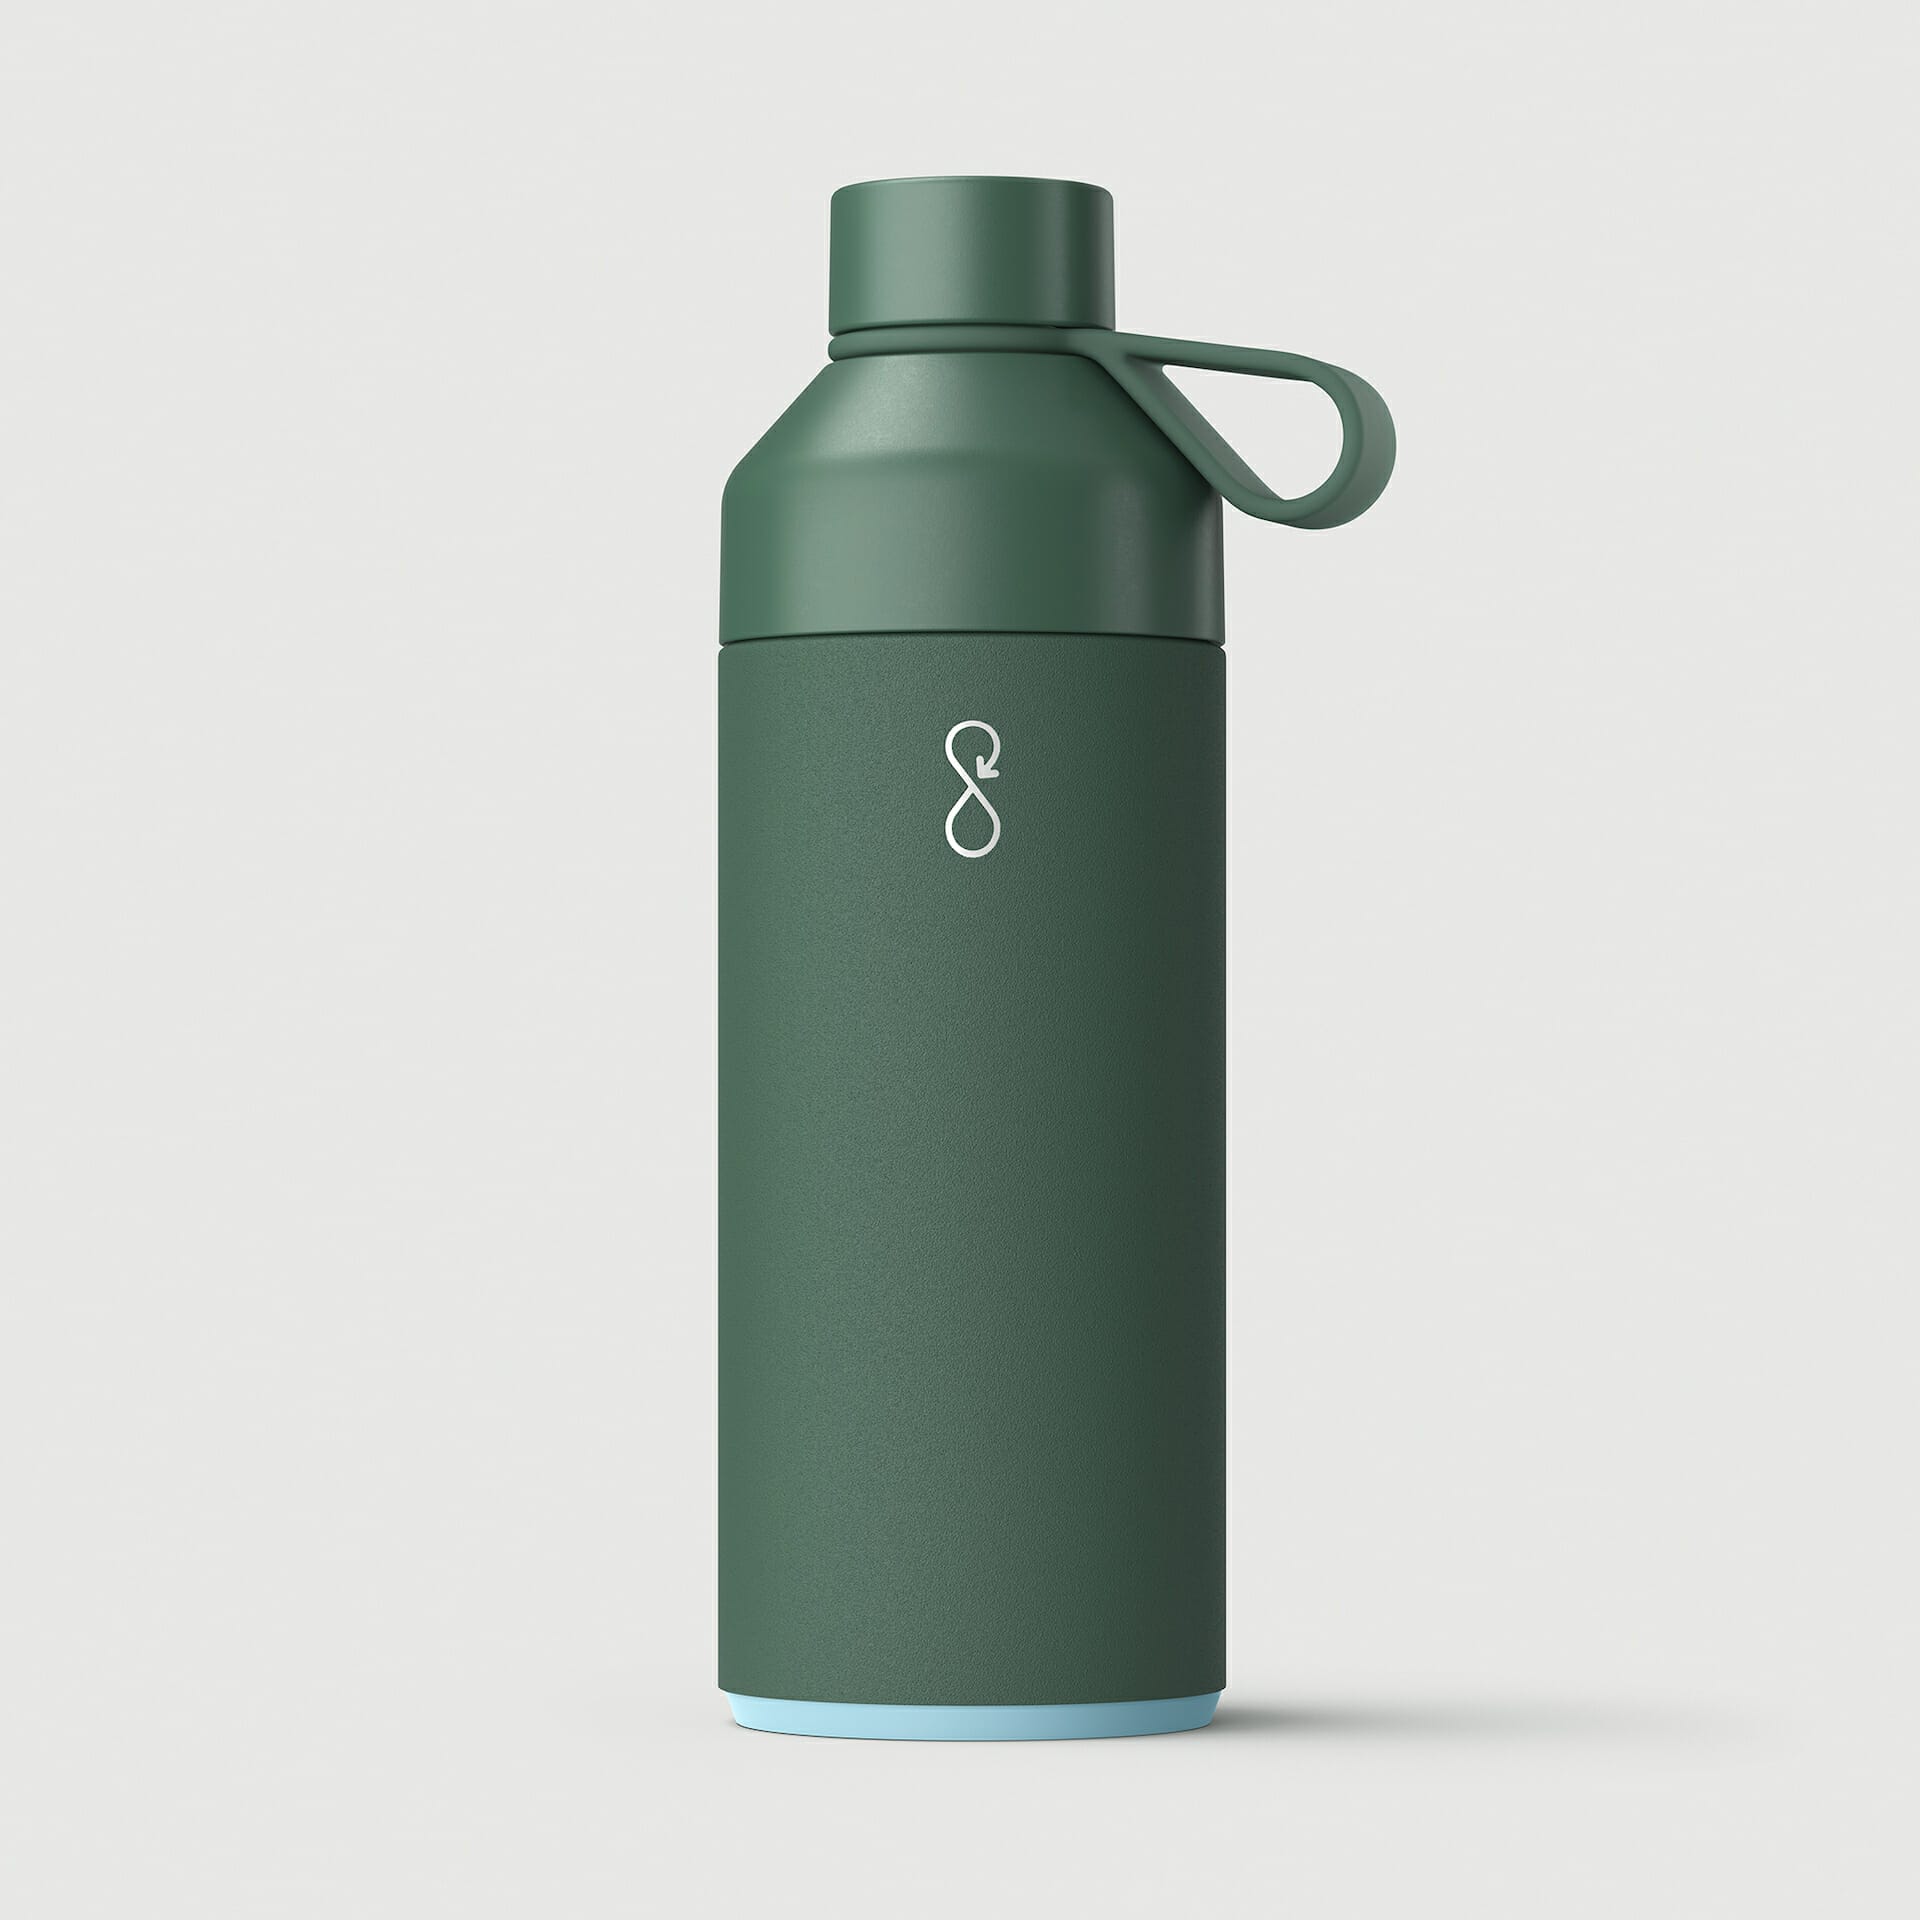 https://etkw95vc89m.exactdn.com/wp-content/uploads/2022/09/custom-metal-water-bottles-with-logo-2.jpg?strip=all&lossy=1&ssl=1